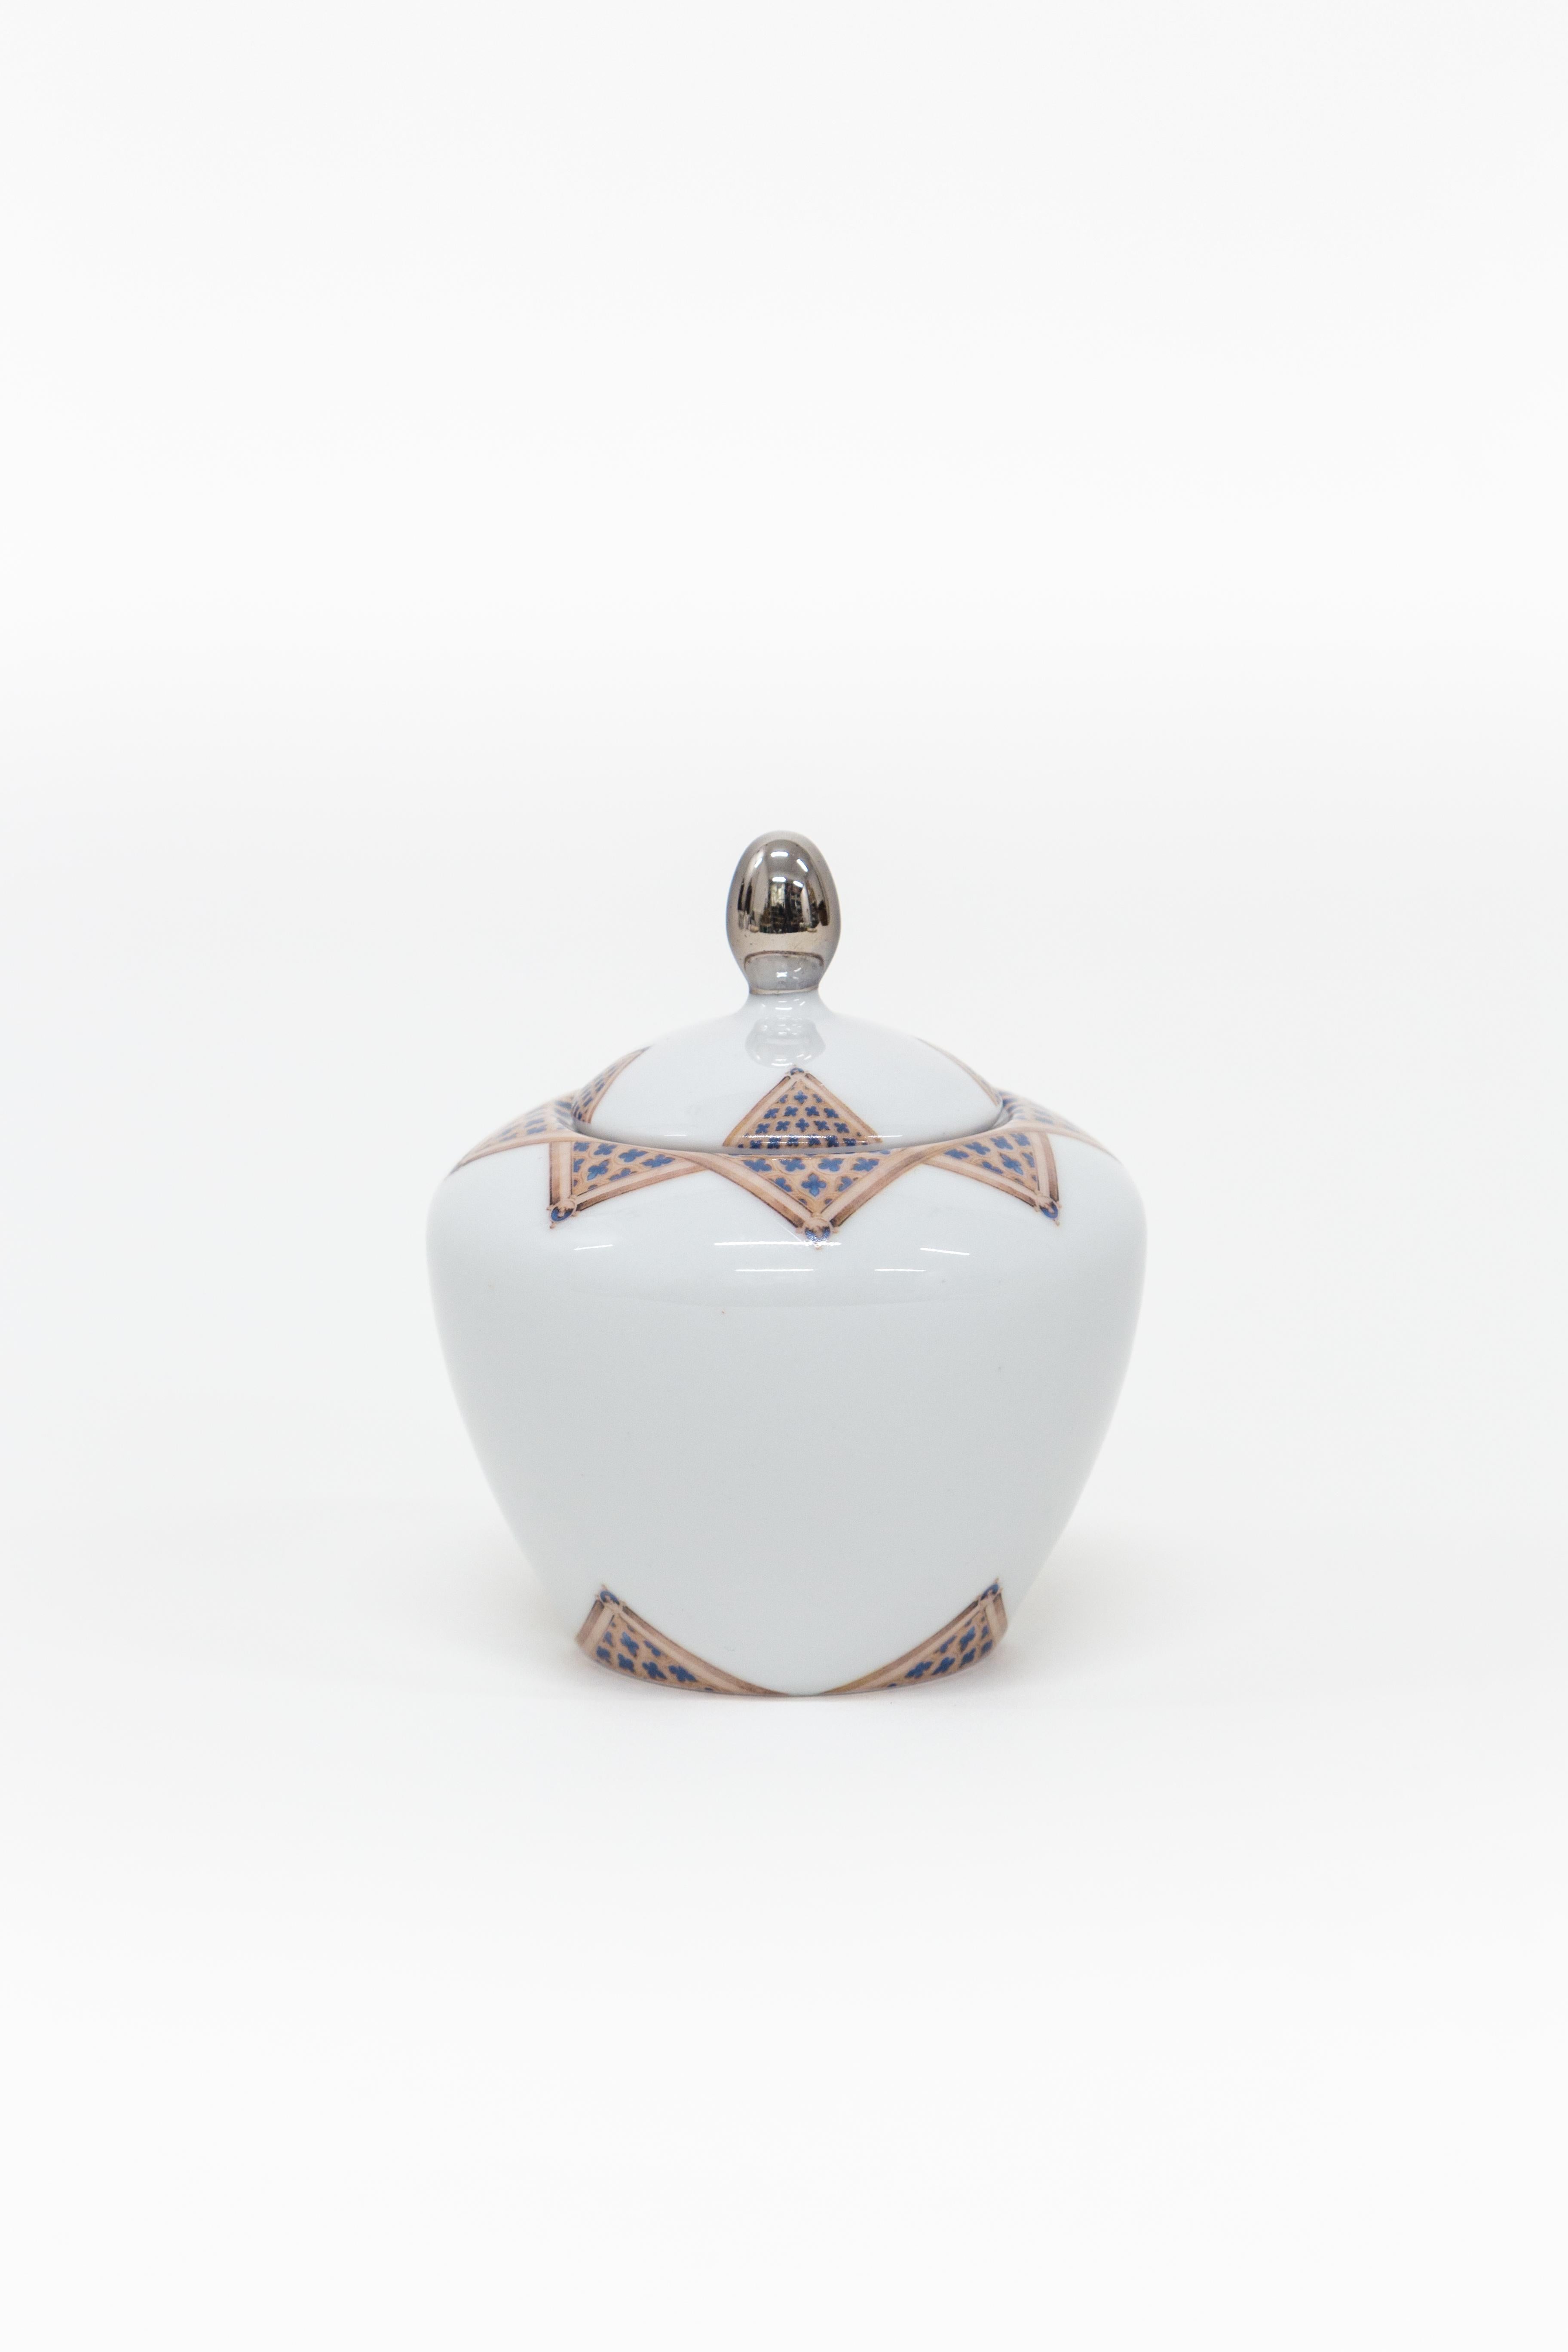 Other Le Volte Celesti, Contemporary Decorated Porcelain Tea Time Set by Vito Nesta For Sale